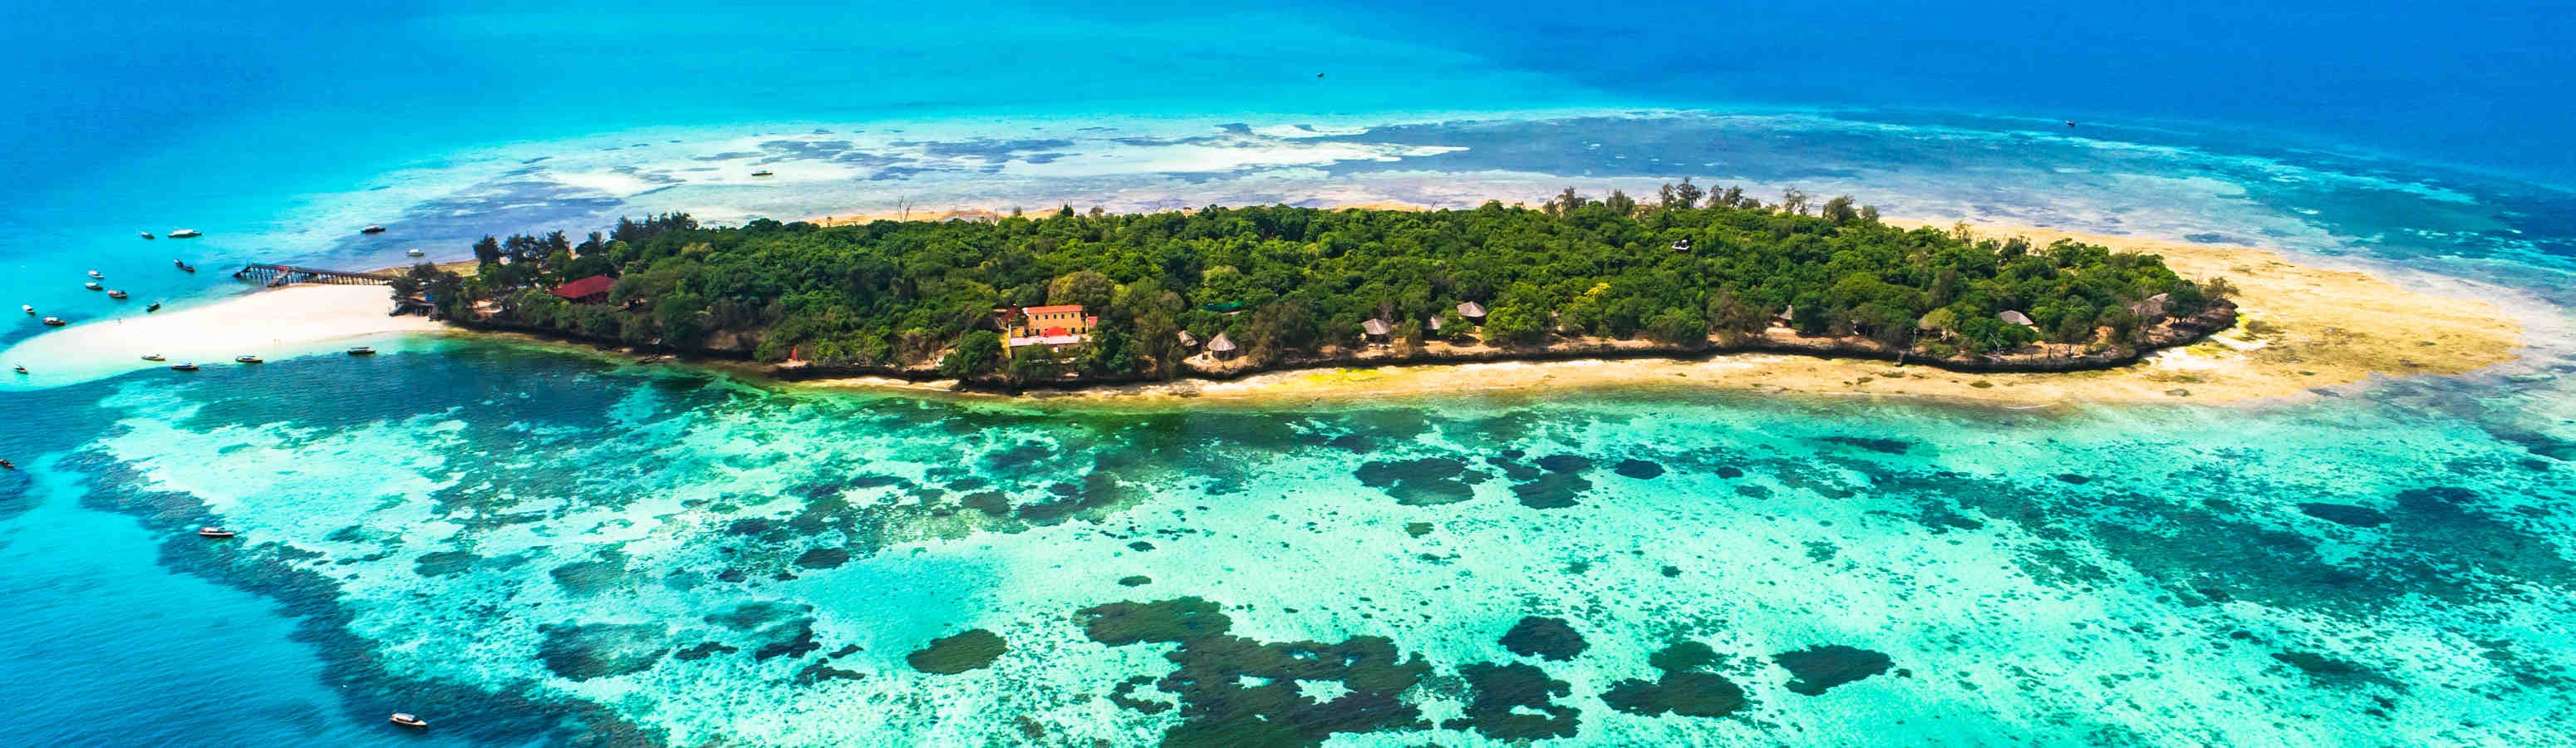 Holidays by the sea in Zanzibar